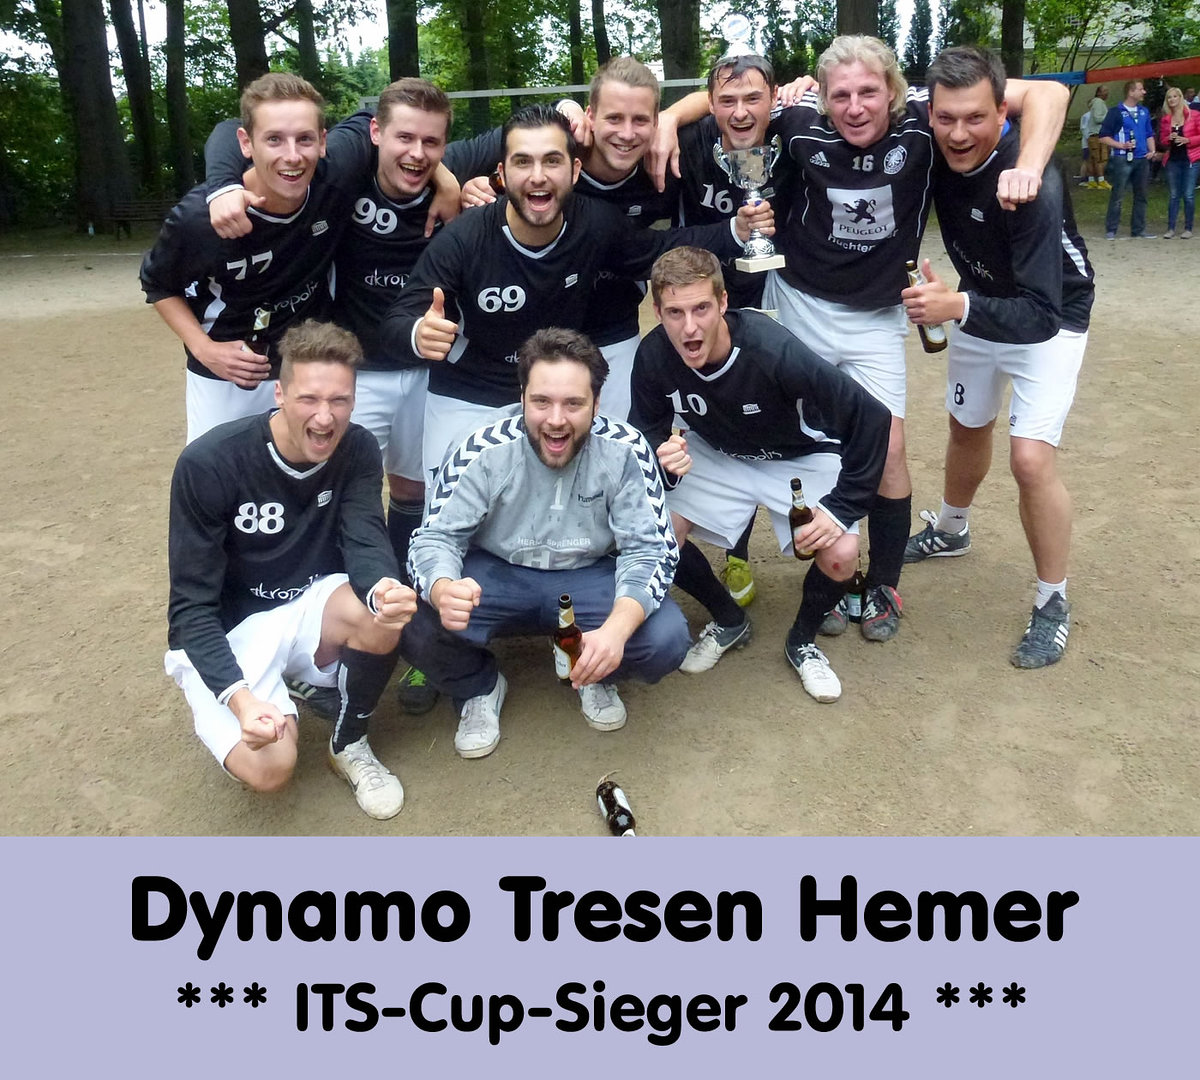 Its cup 2014   its cup sieger   dynamo tresen hemer retina